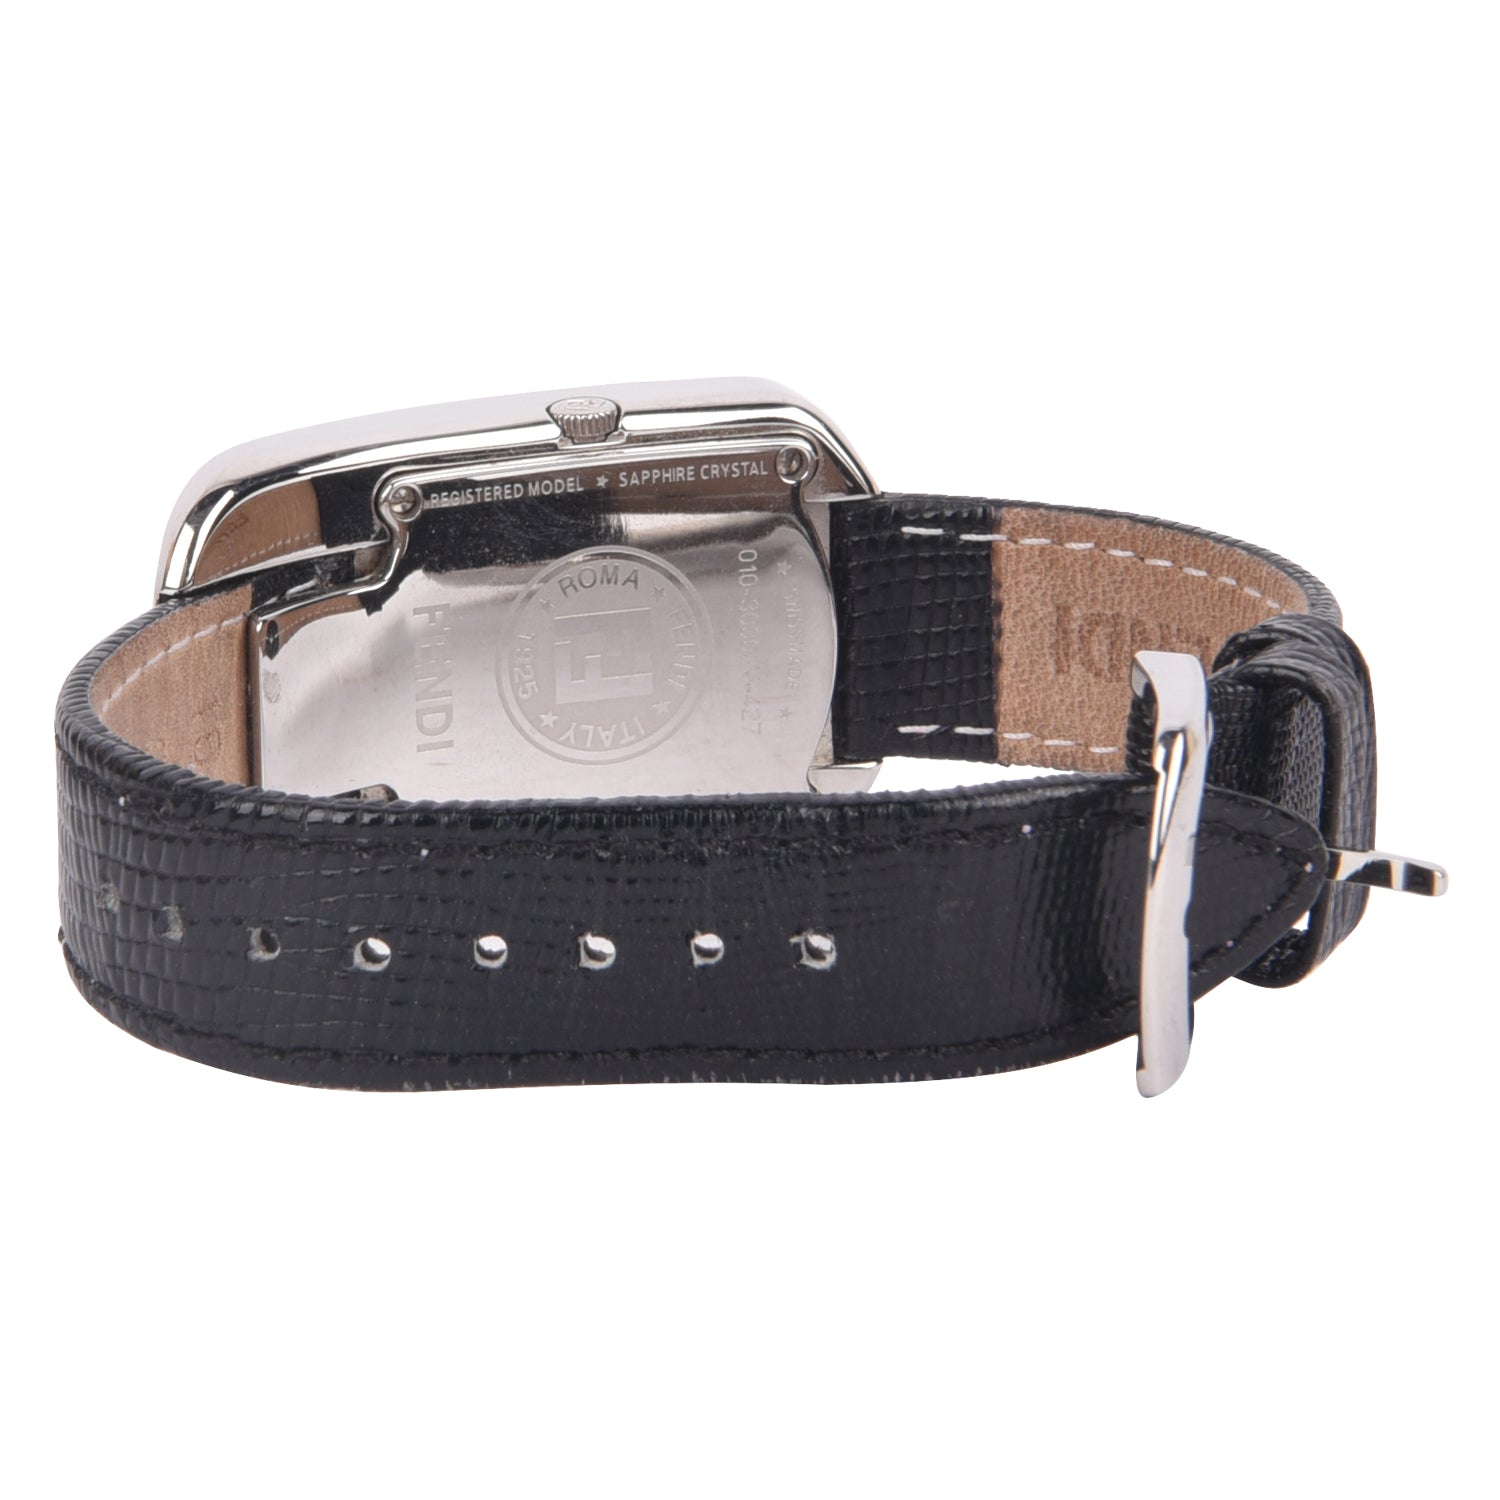 Fendi Chameleon Quartz with Leather Strap Watch